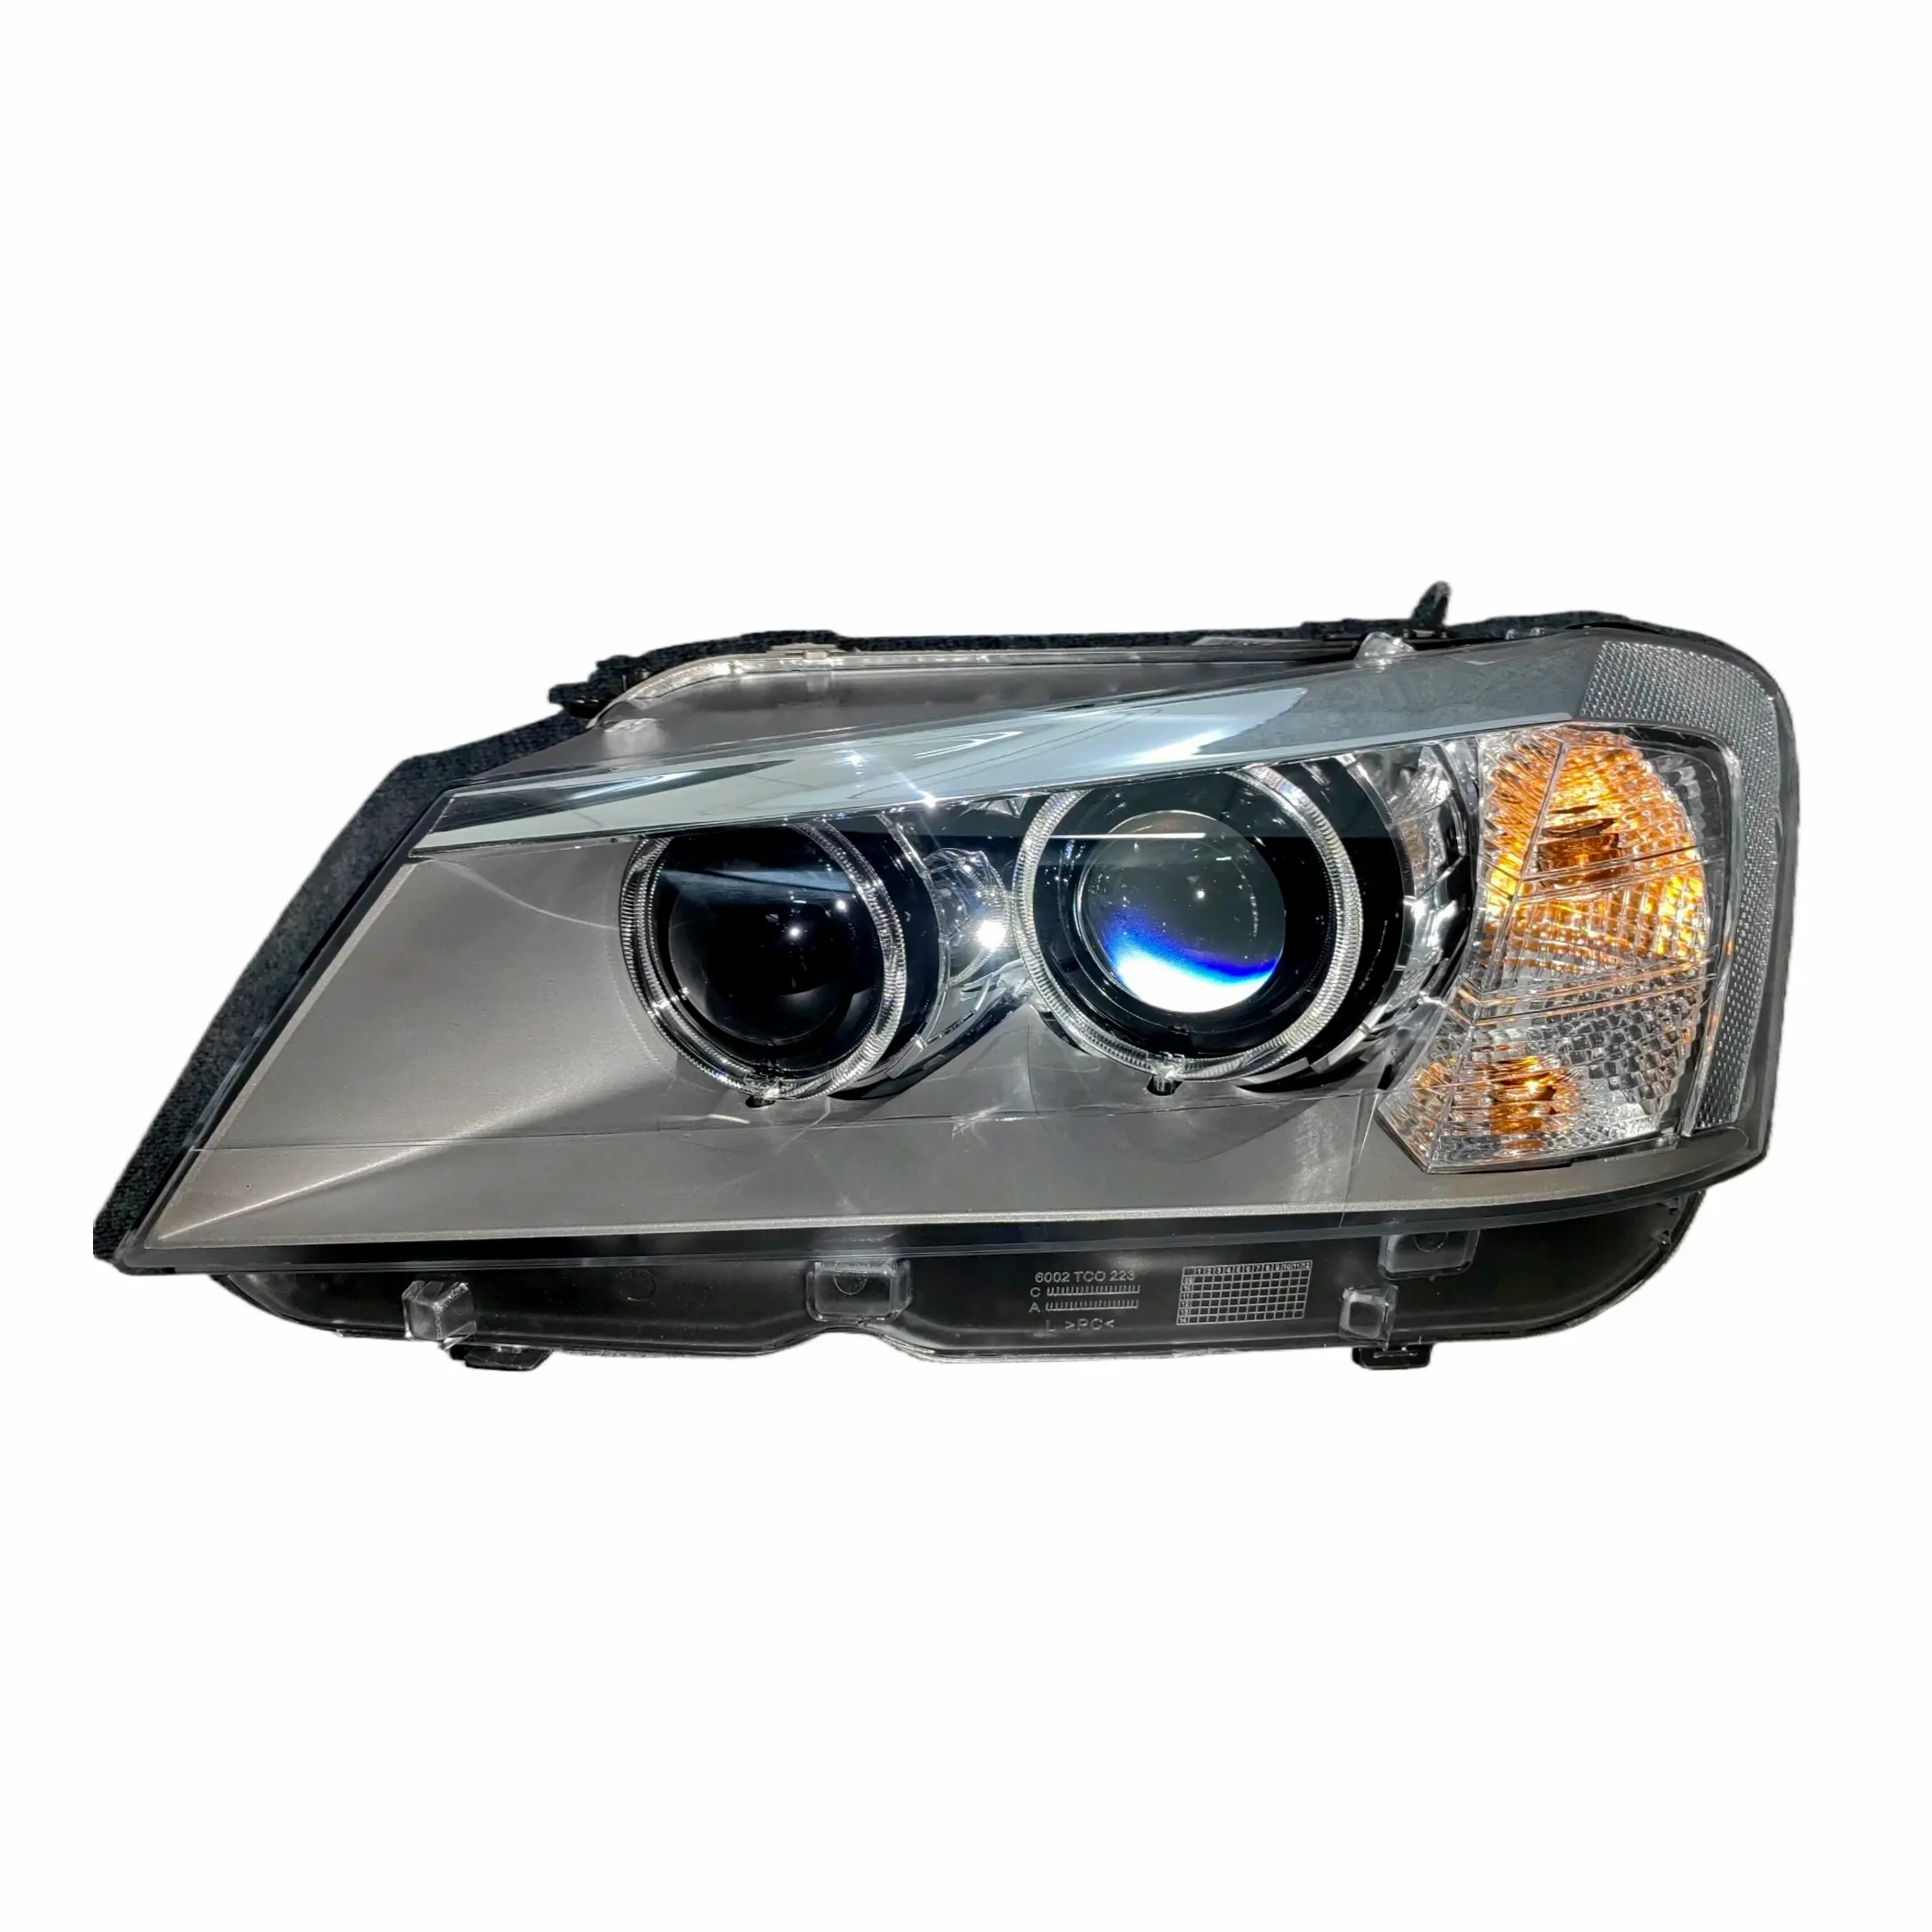 Suitable for BMW X3 car headlight F25 Hernia headlight car lighting system